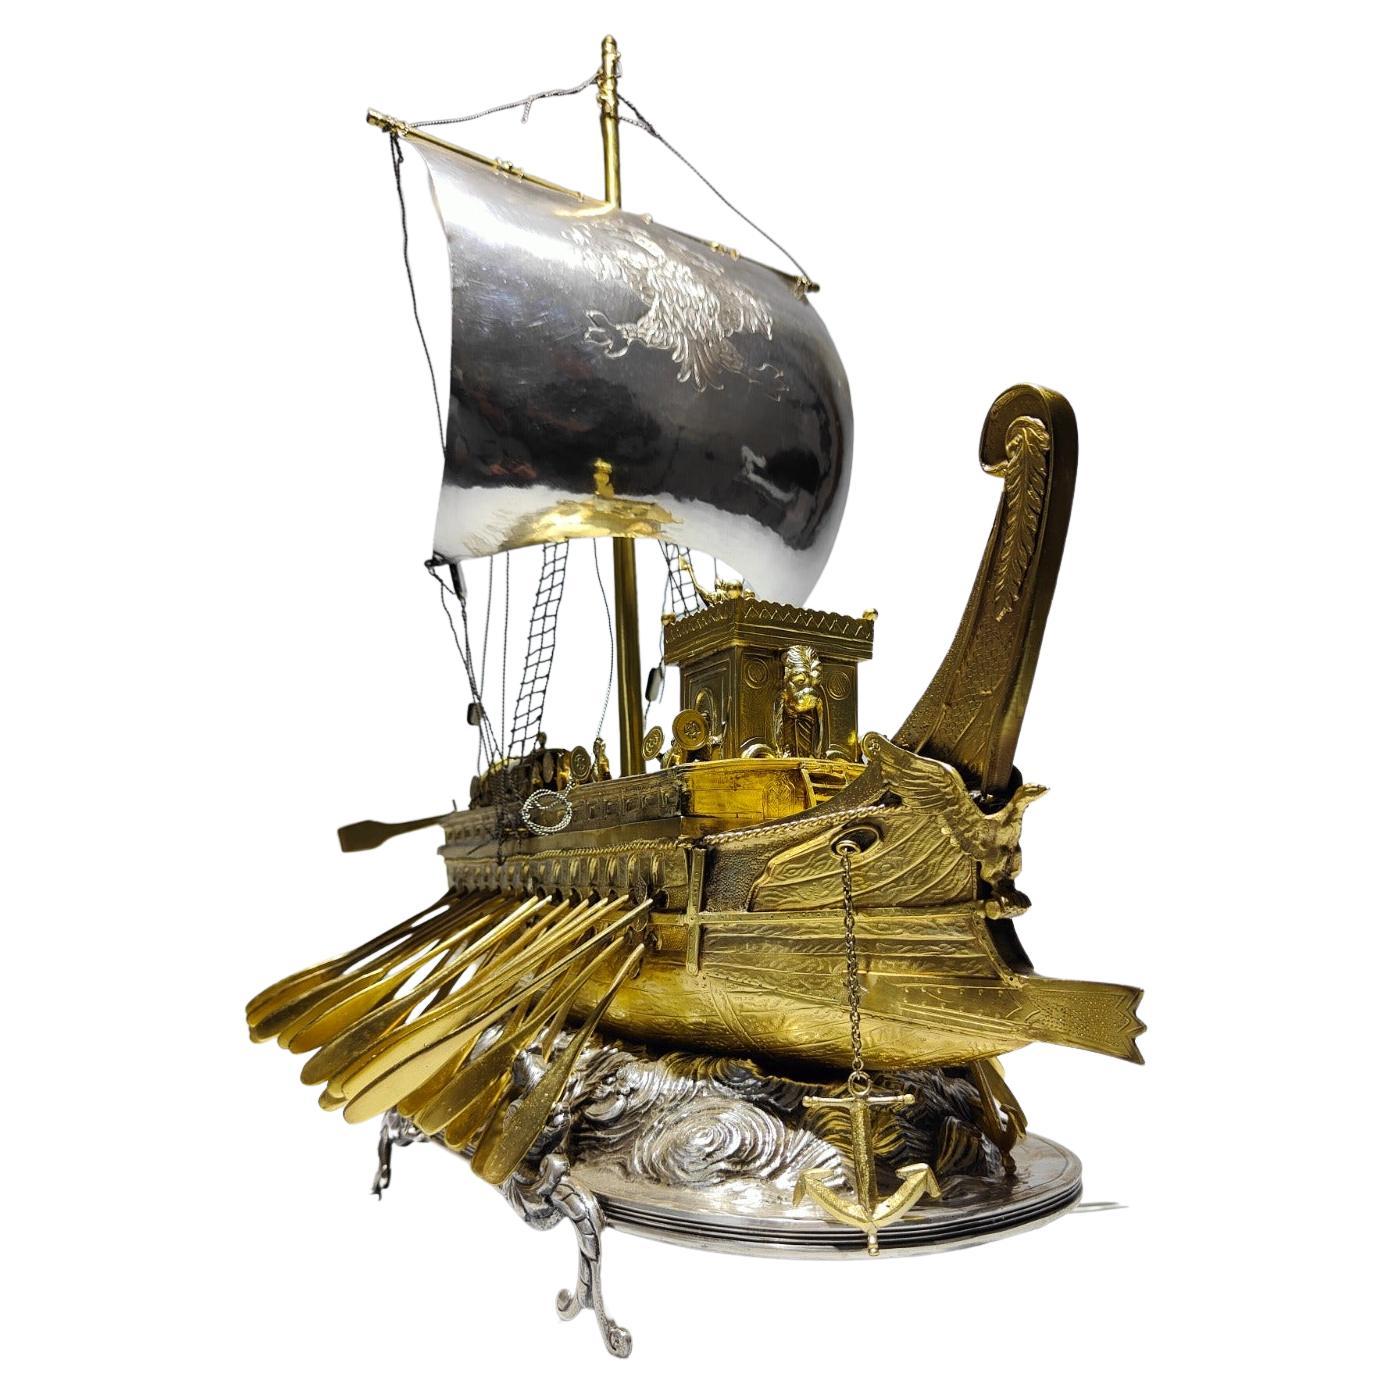 18th Century, Spanish Silver Roman Bireme Automaton Ship "Nef"